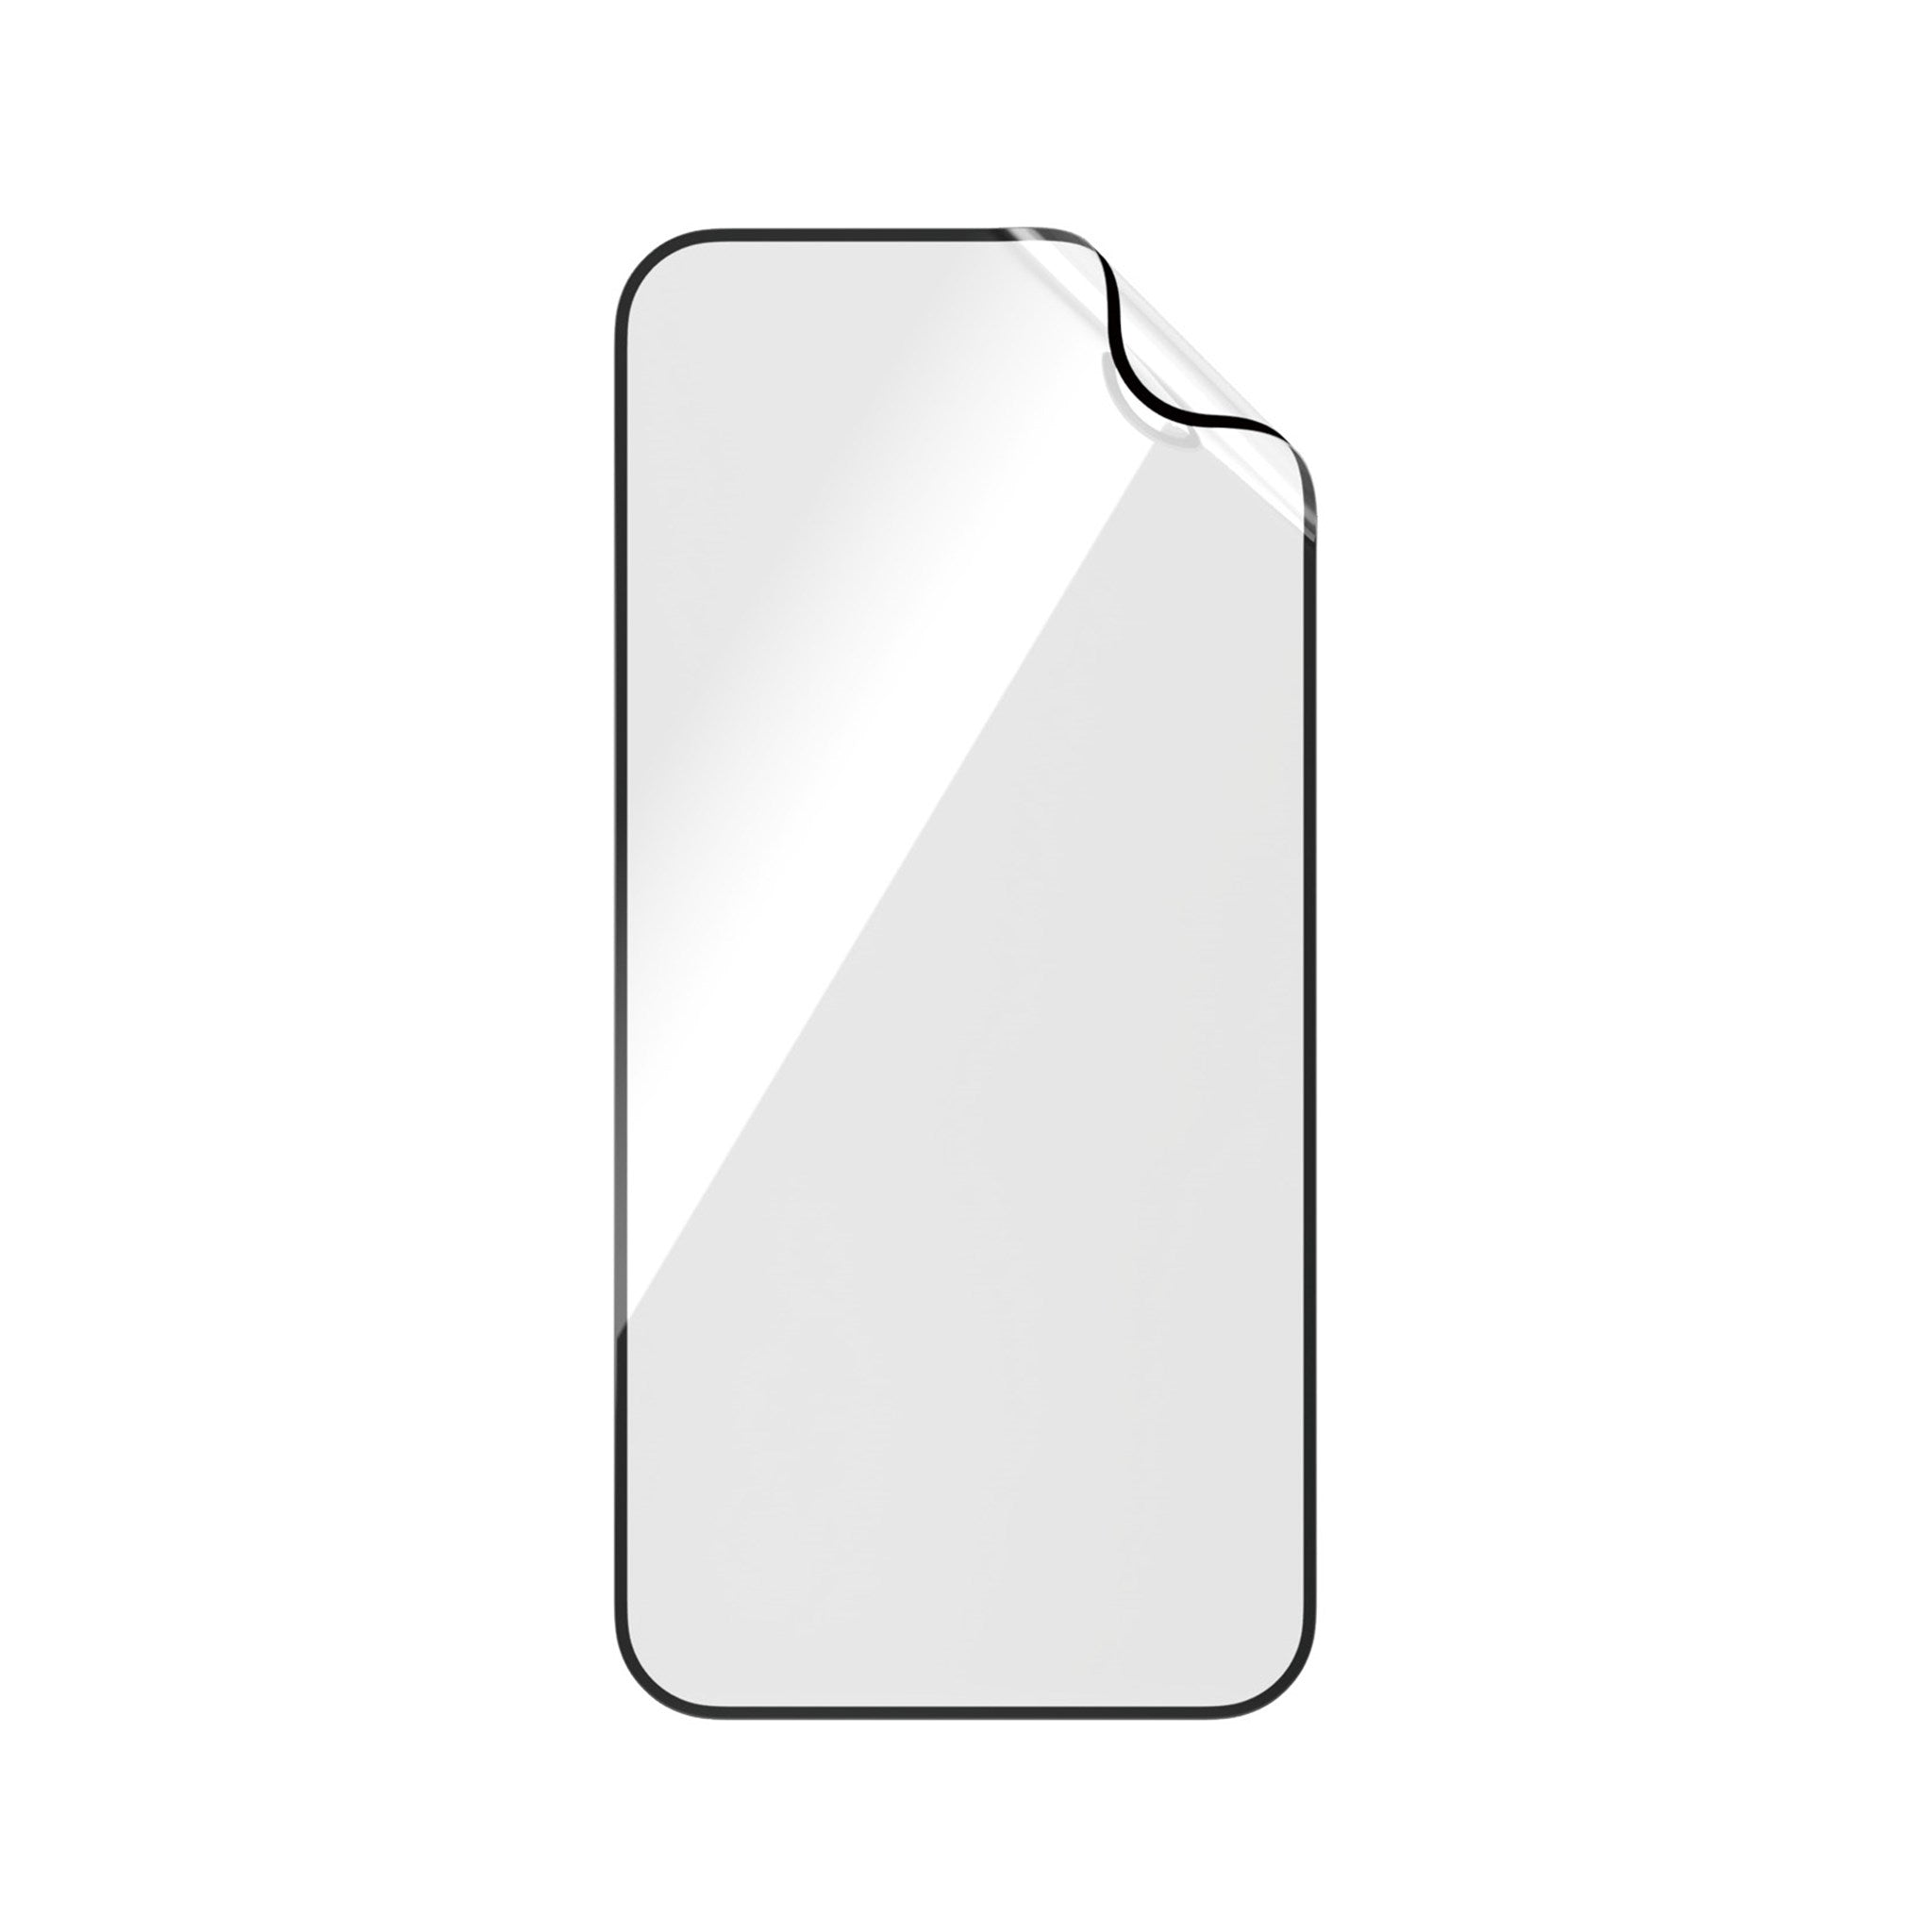 PANZERGLASS MATRIX Ultra-Wide Fit 15 Apple iPhone Displayschutz(für Plus)